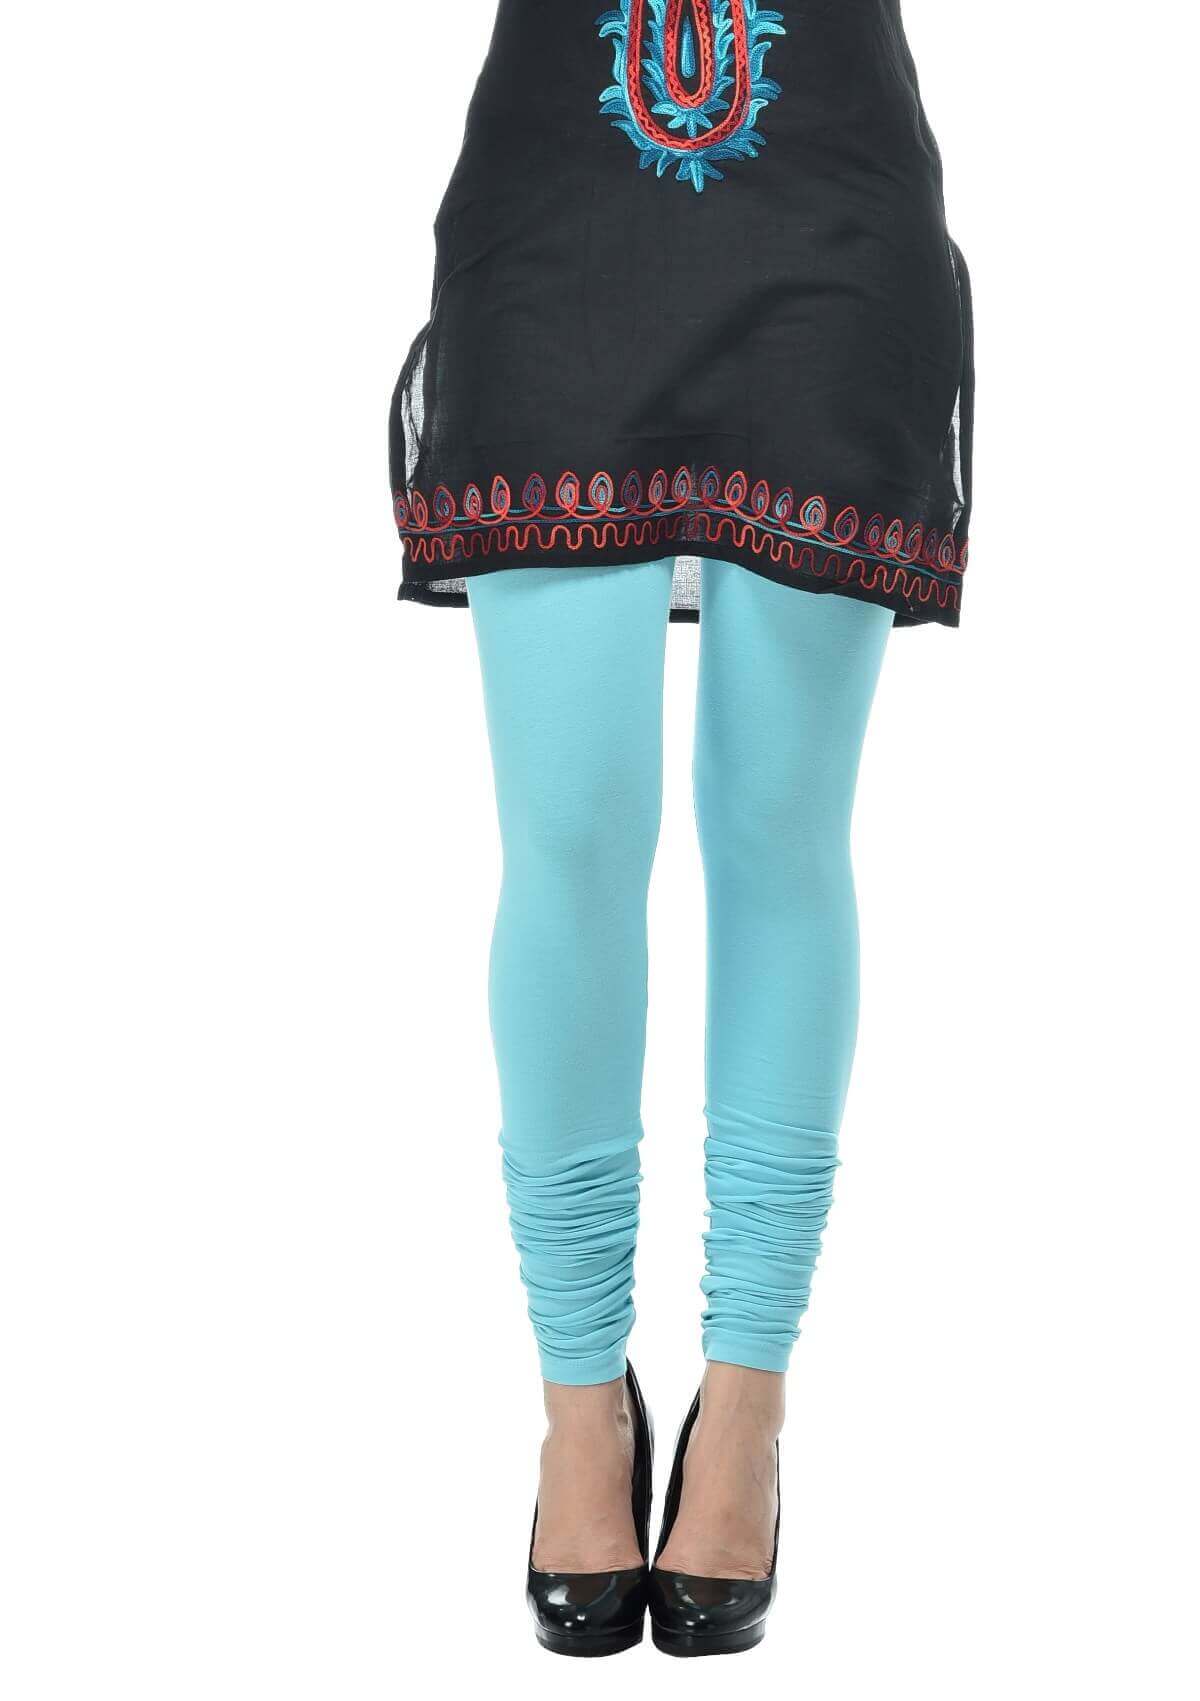 Shop Now Leggings Churidar Skyblue Color Women's Churidar Leggings – Lady  India